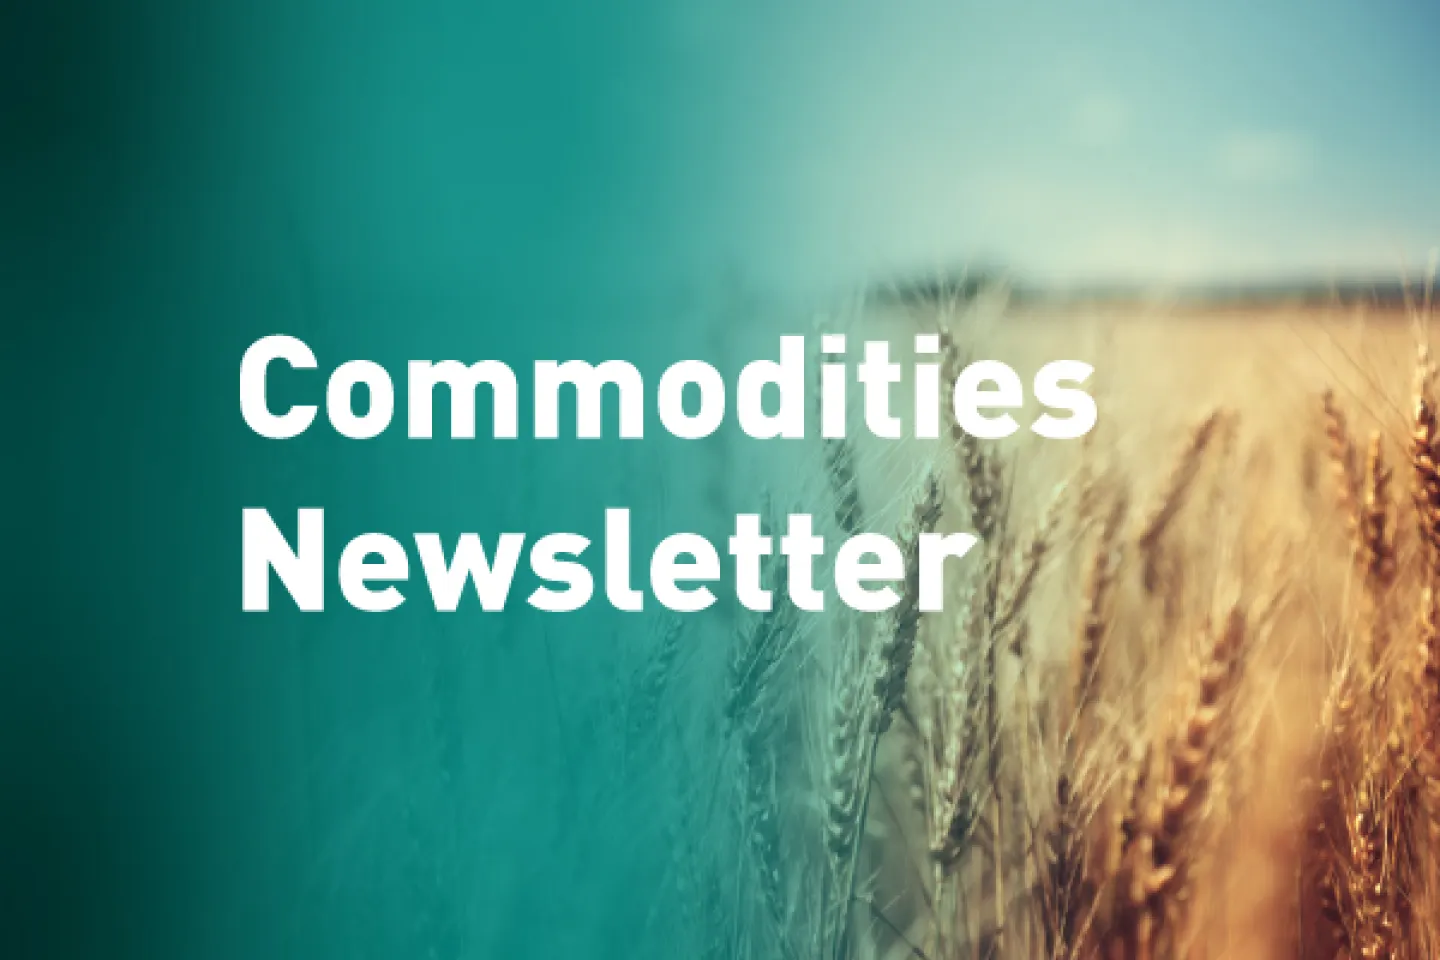 enx_commodities-newsletter_insights-thumbnail-101123_1.jpg